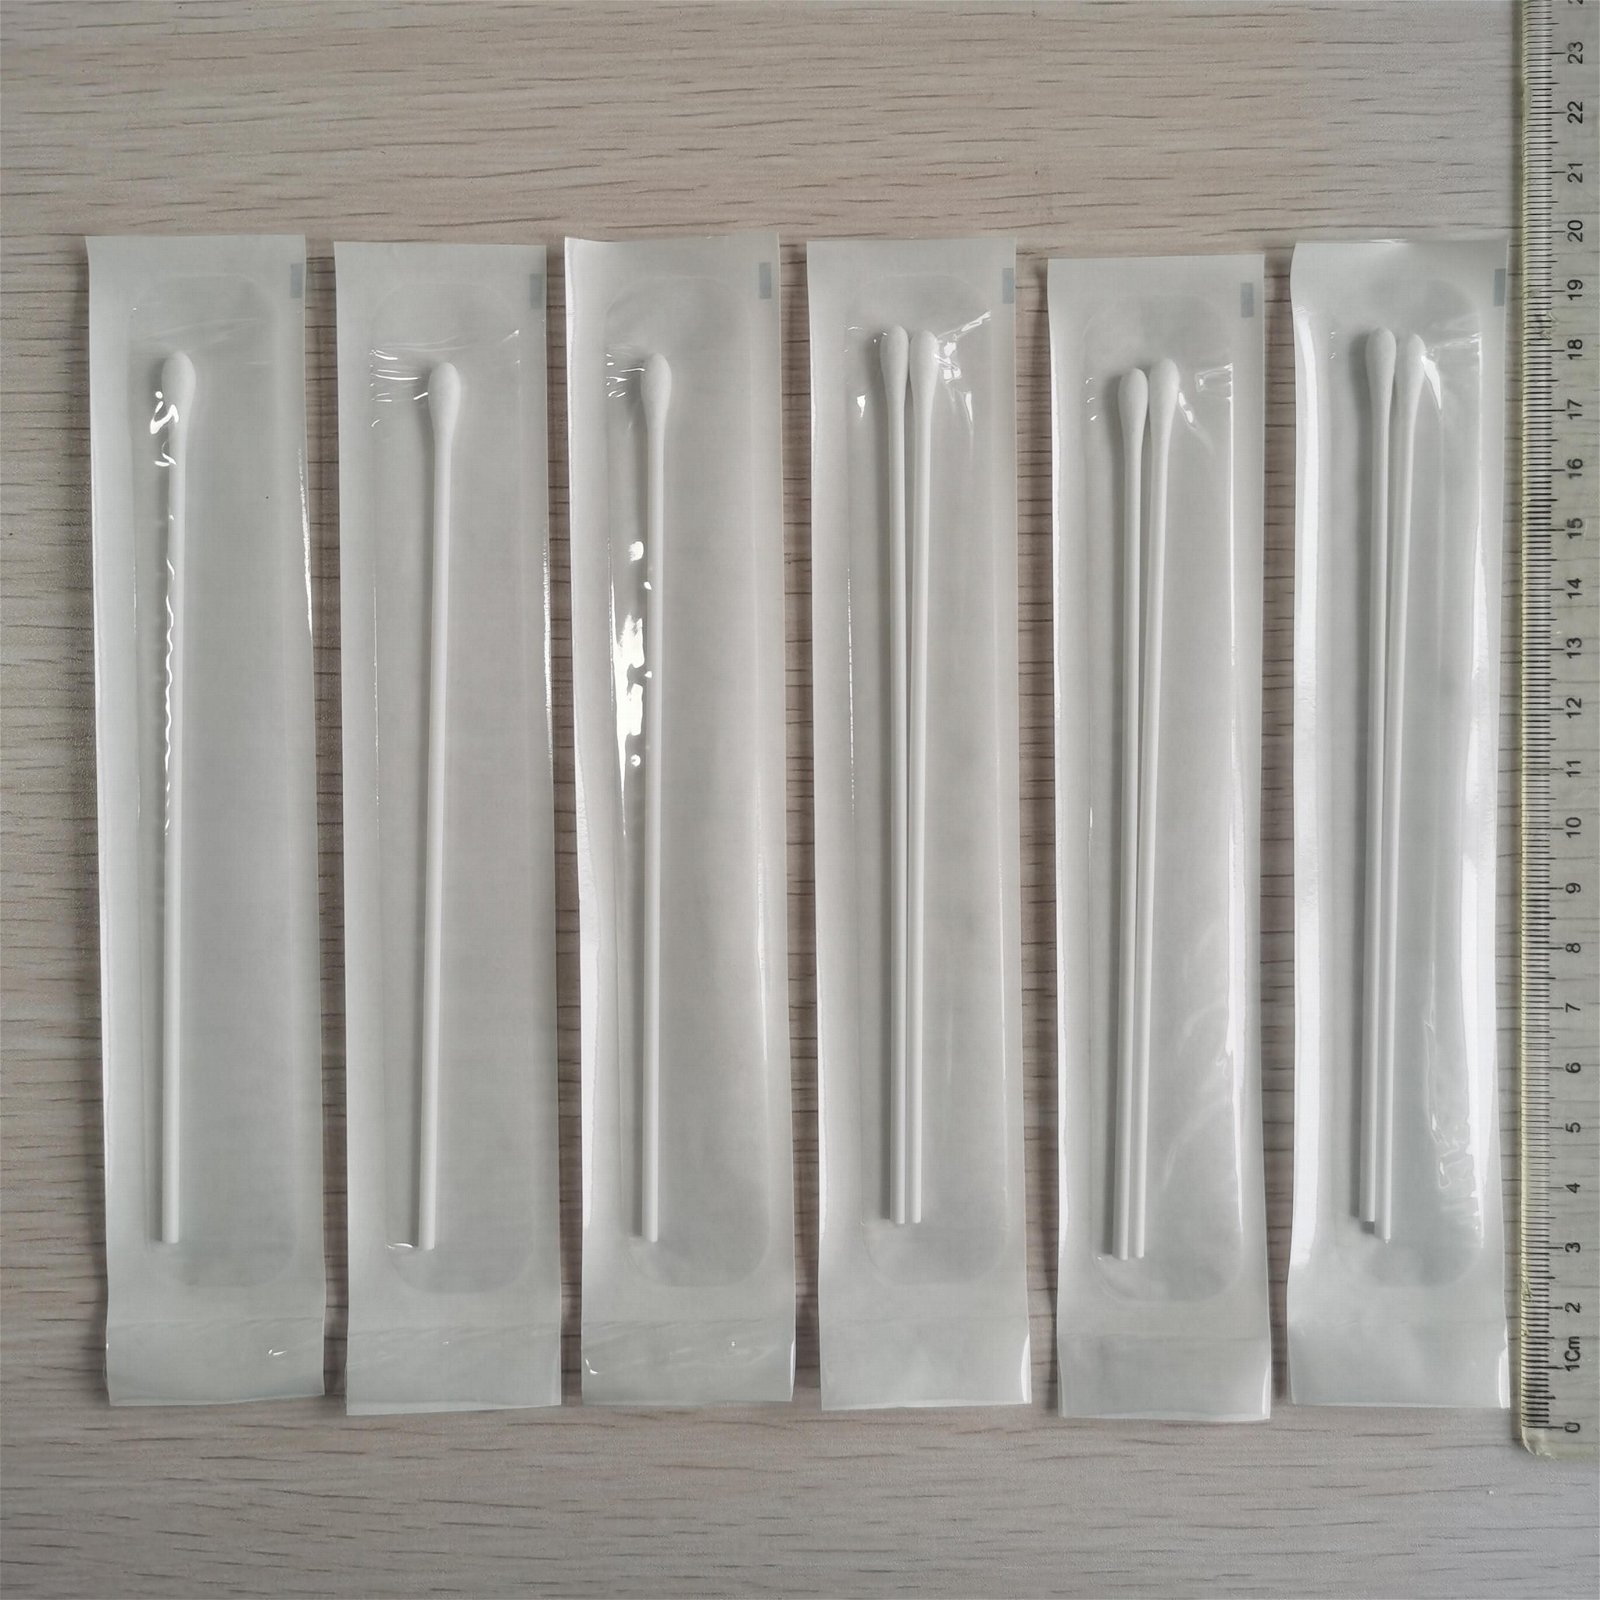 15cm plastic rod (ps/pp) rayon sampling cotton swab 4